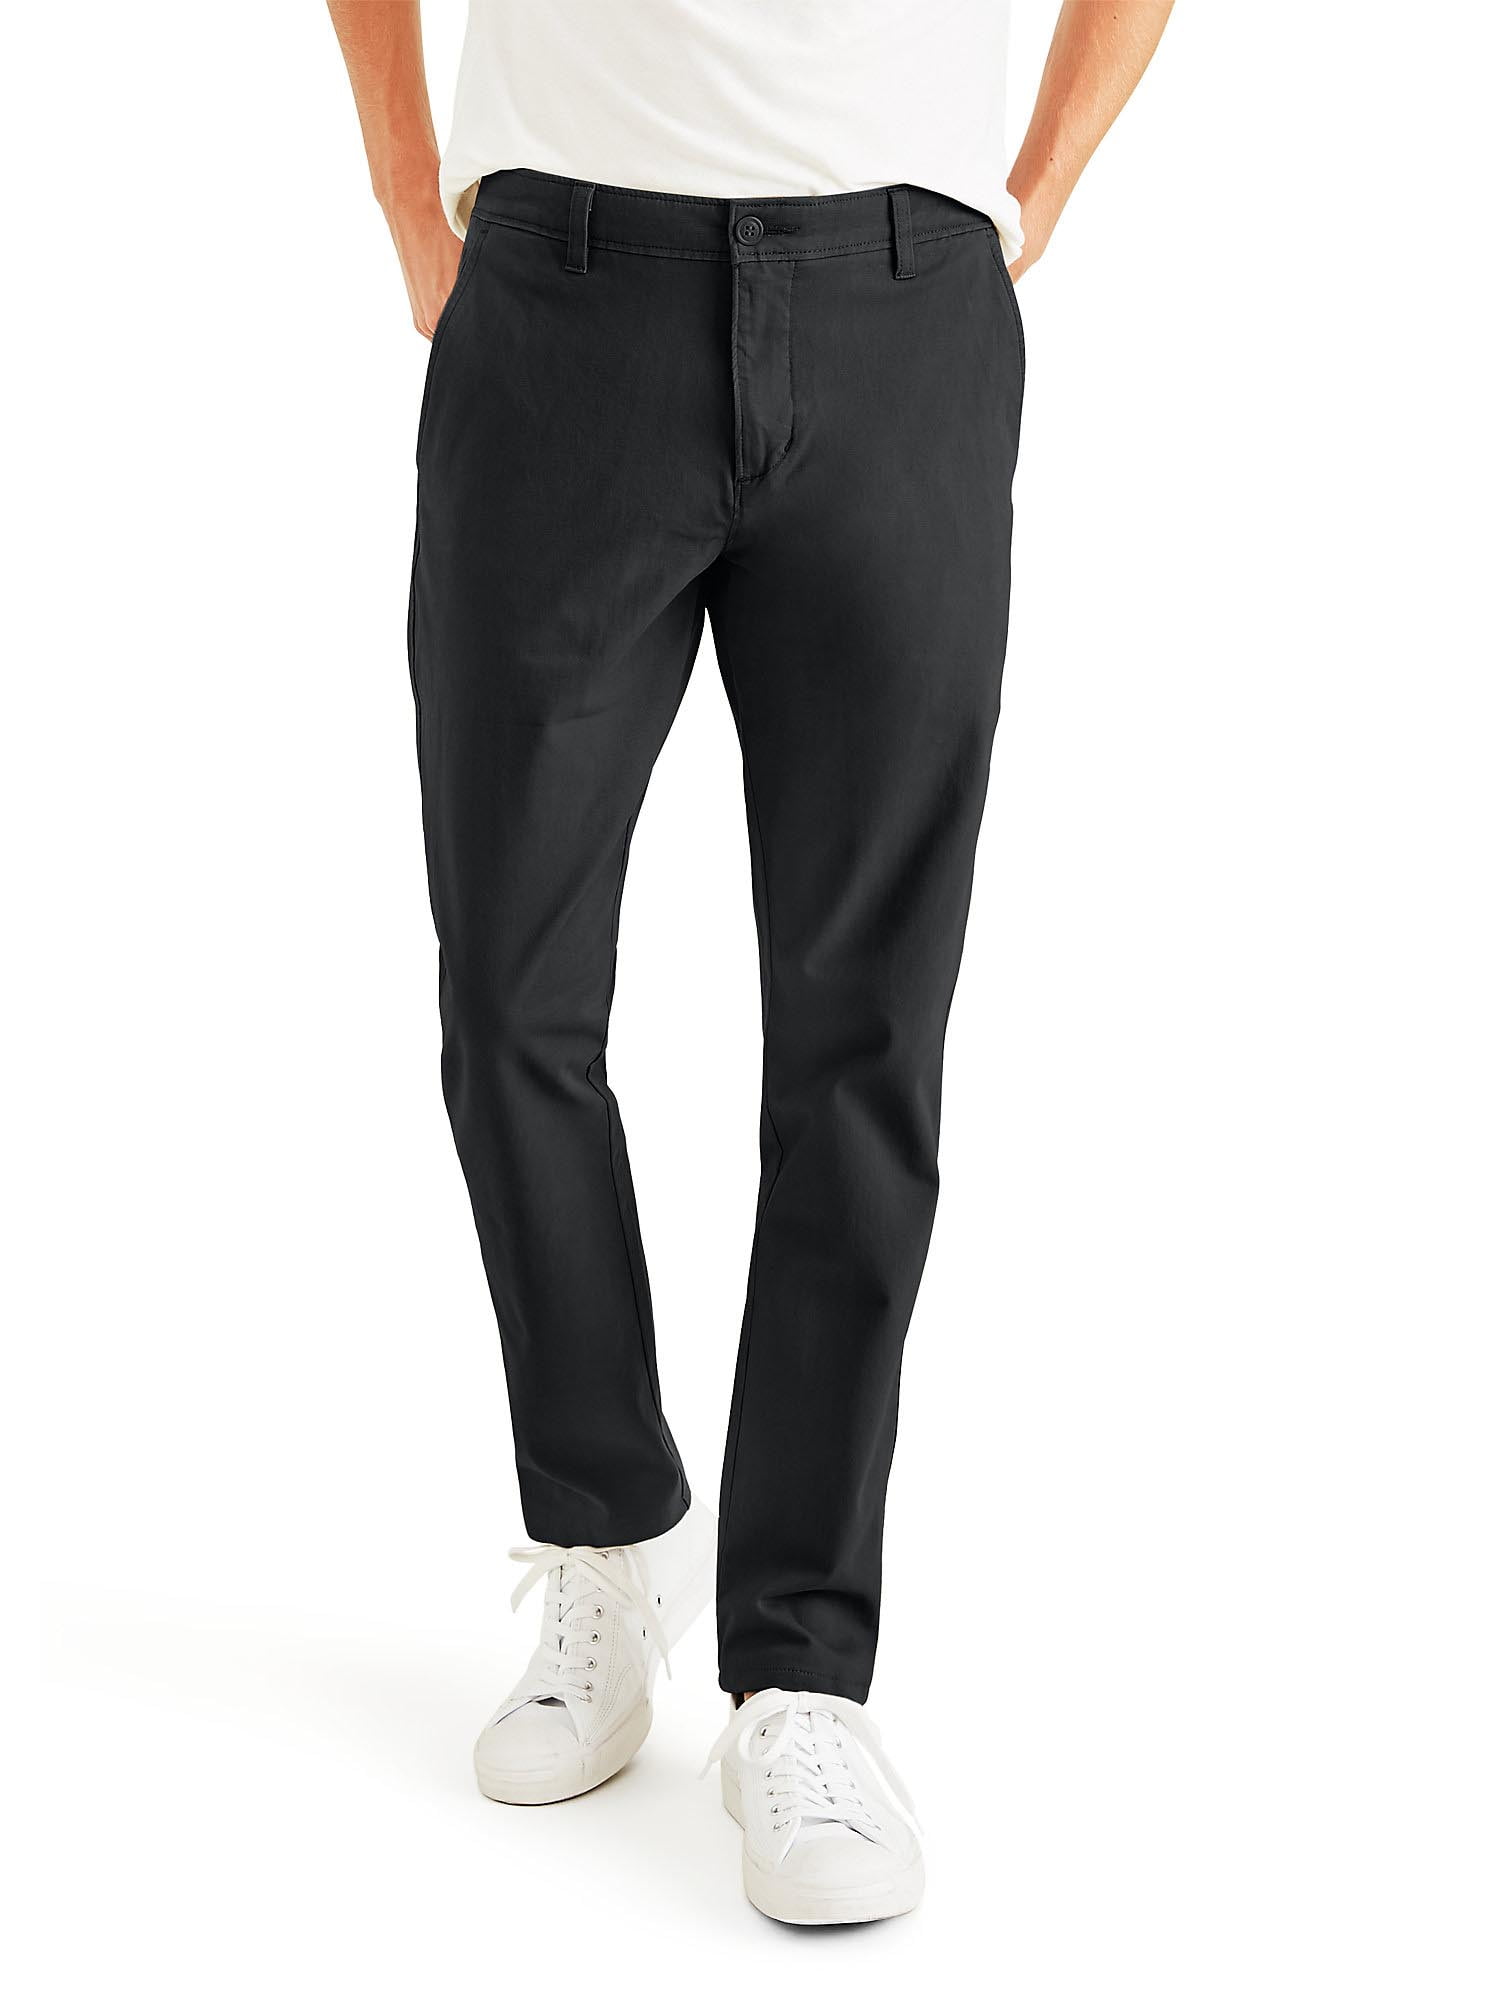 Dockers Men's Slim Fit Smart 360 Flex Ultimate Chino Pants - Walmart.com